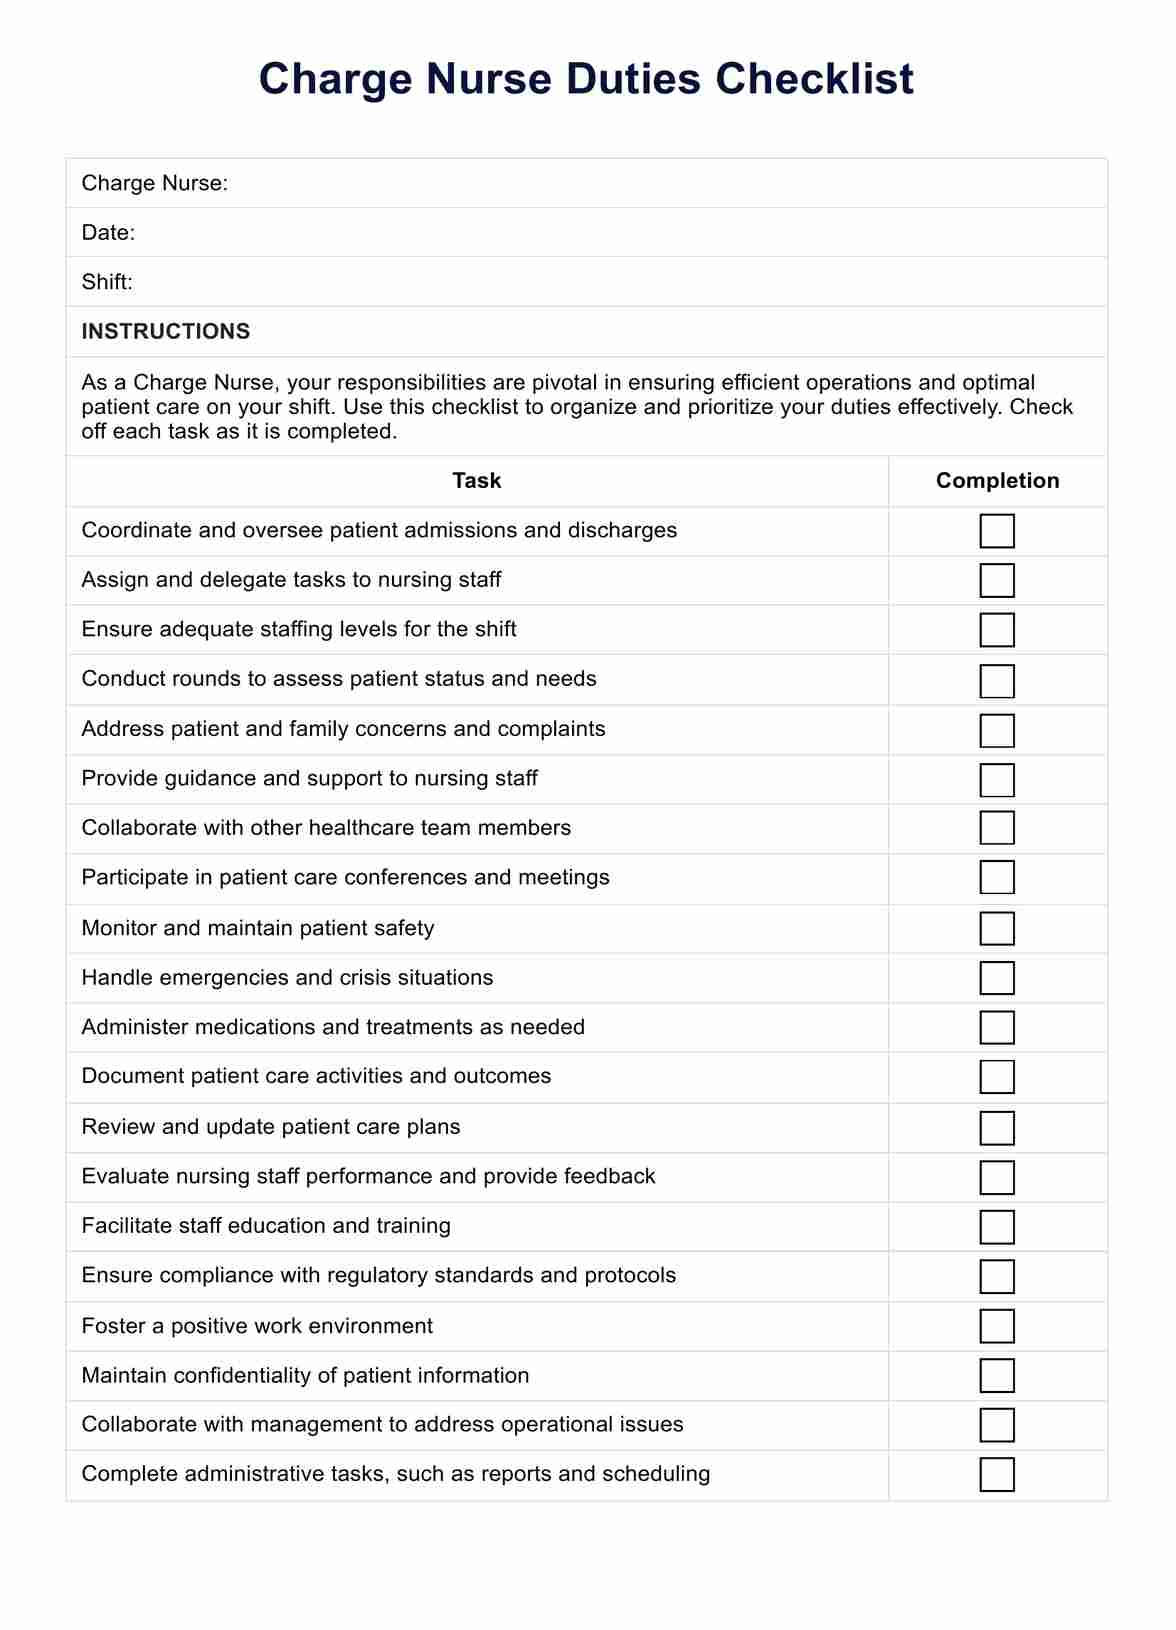 Charge Nurse Duties Checklist PDF Example